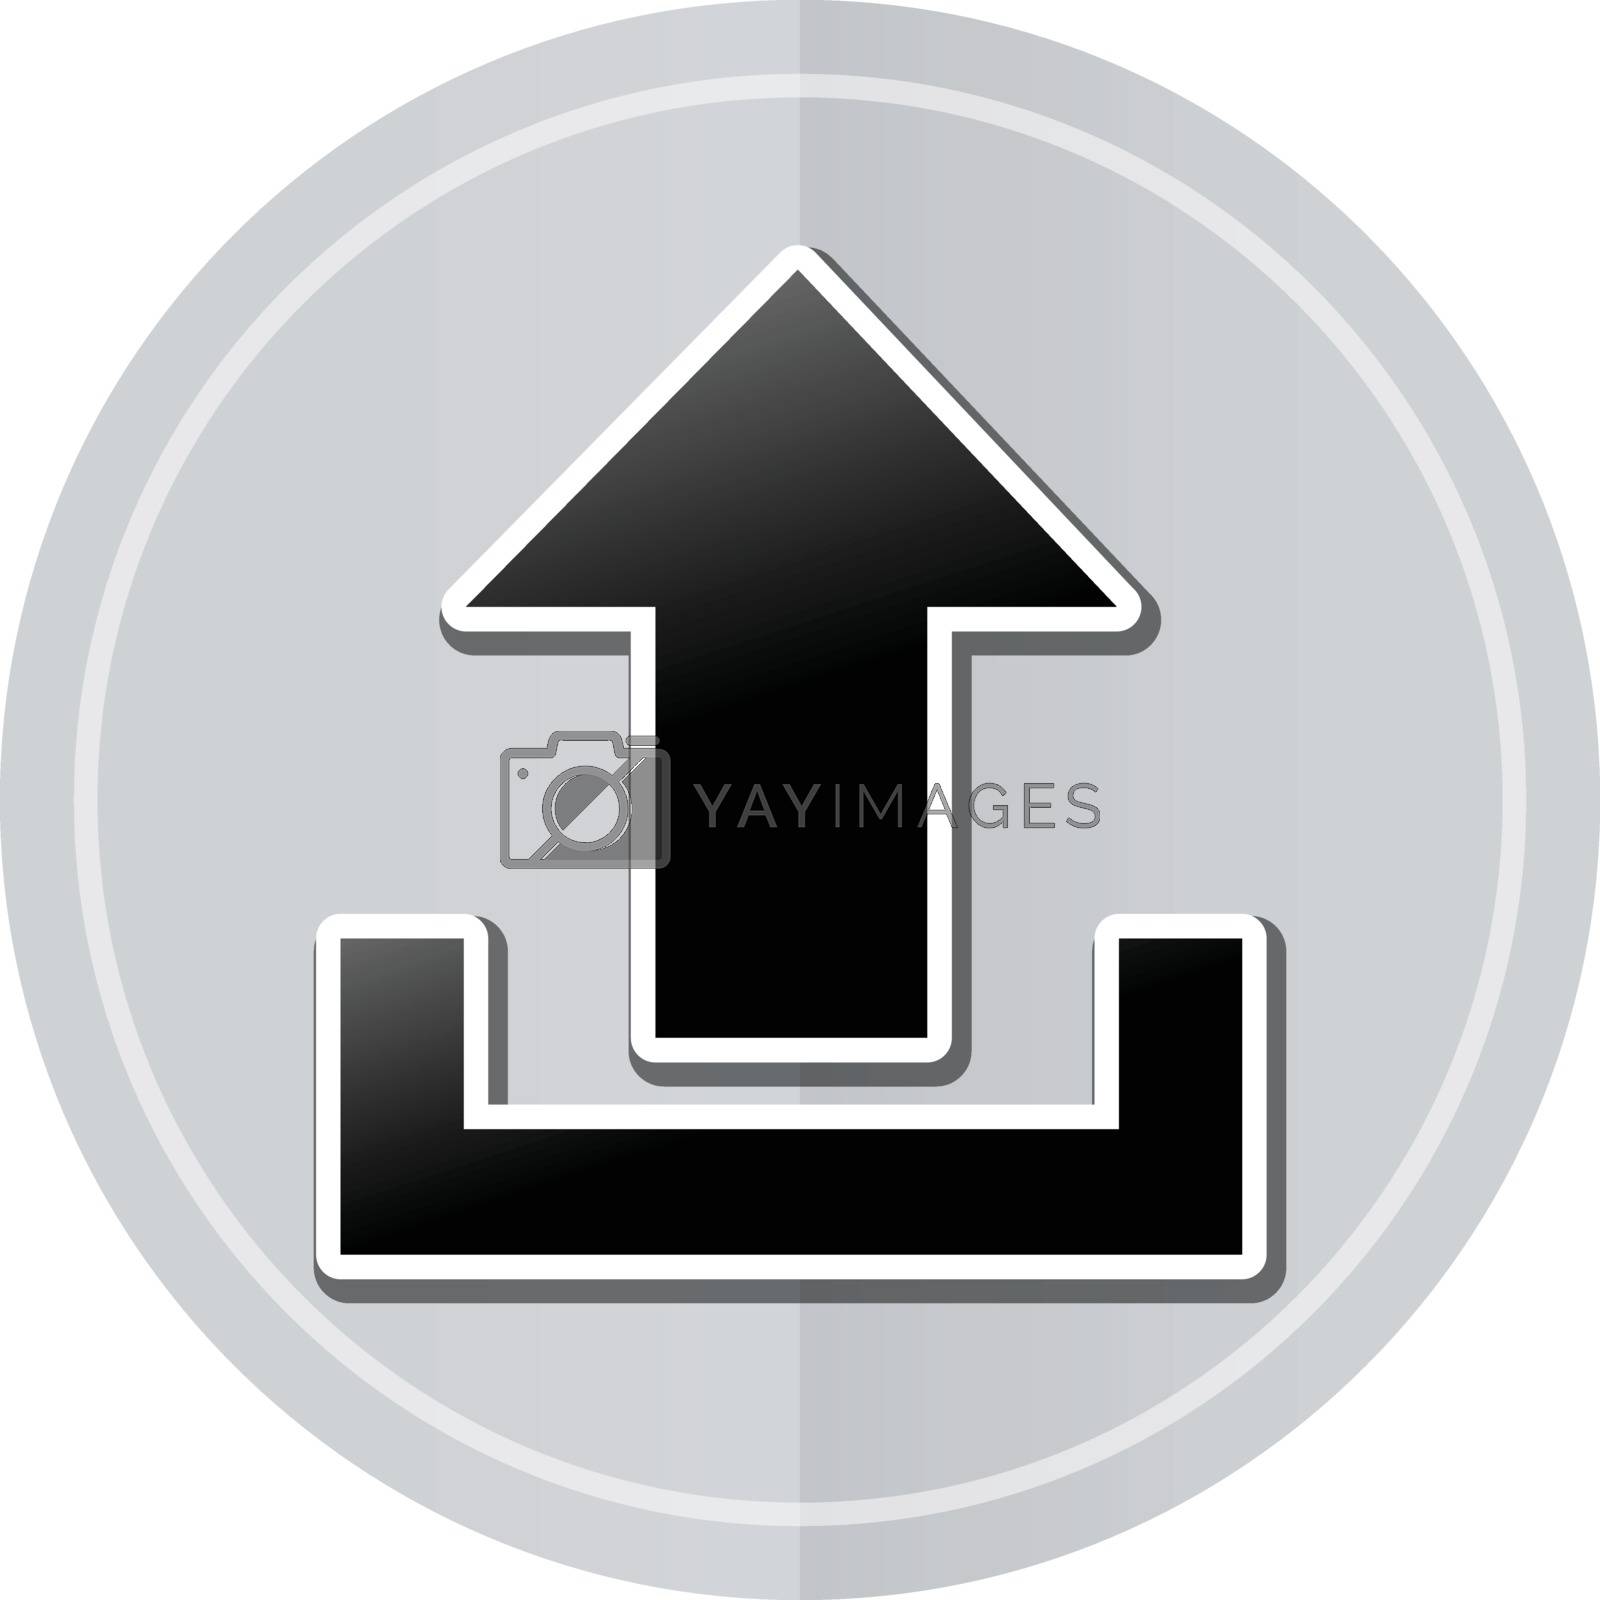 Royalty free image of upload sticker icon by nickylarson974